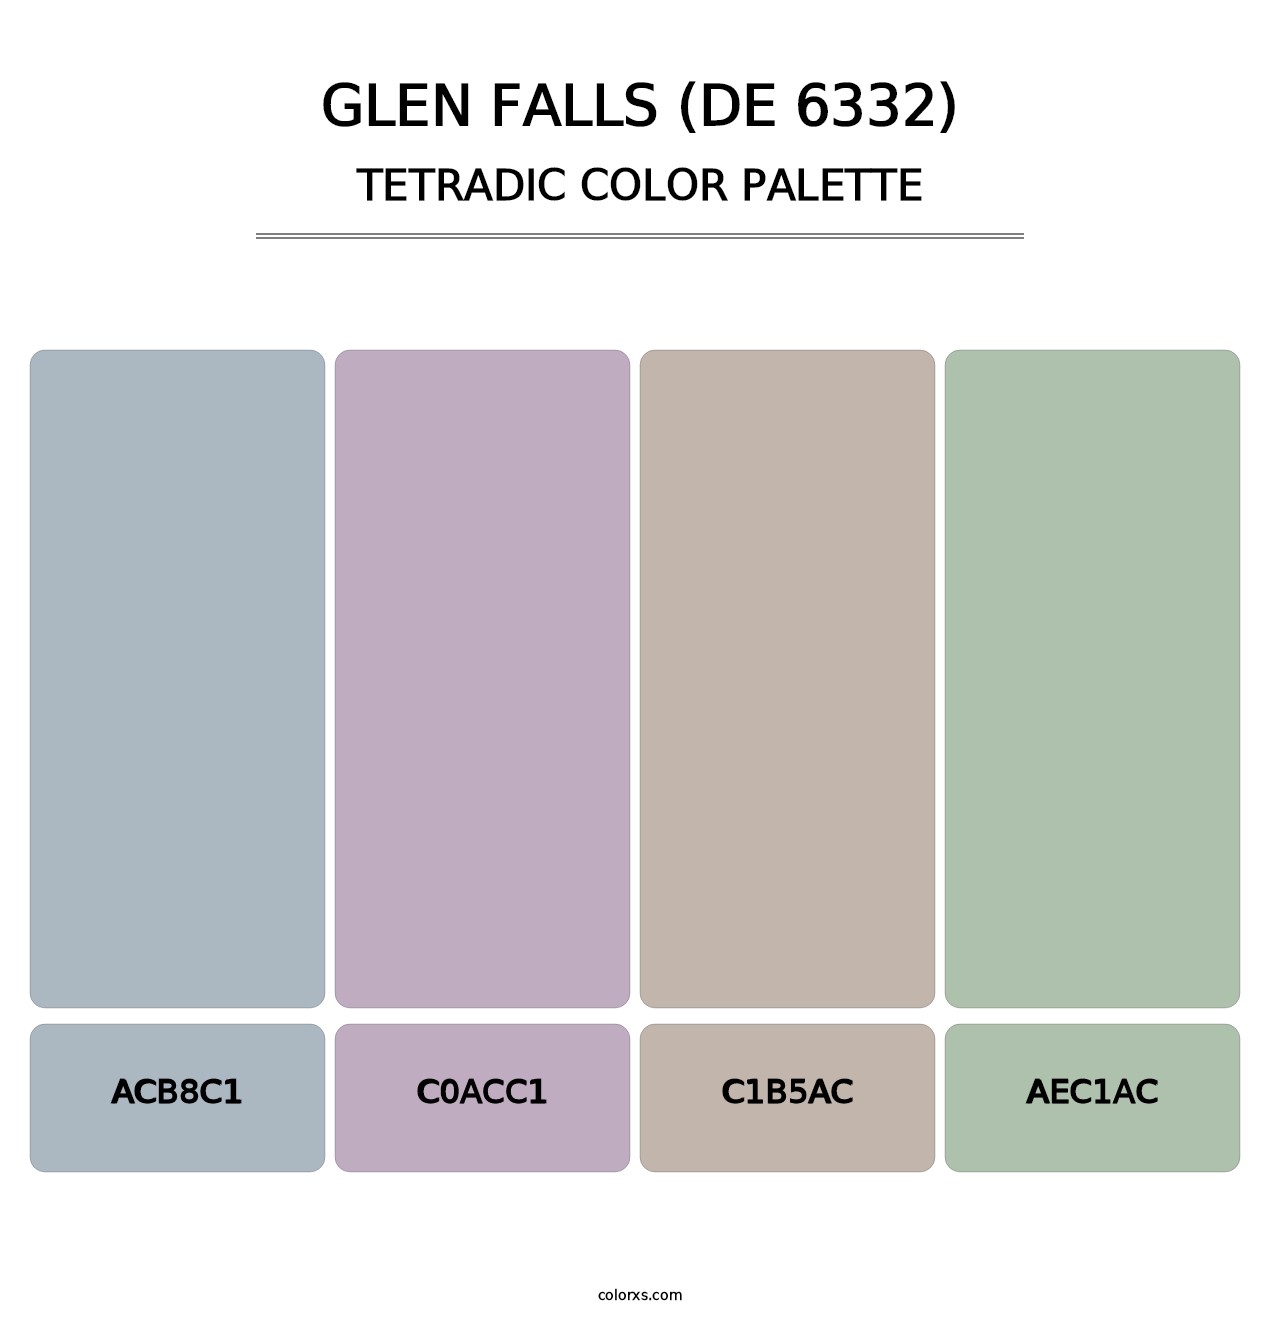 Glen Falls (DE 6332) - Tetradic Color Palette